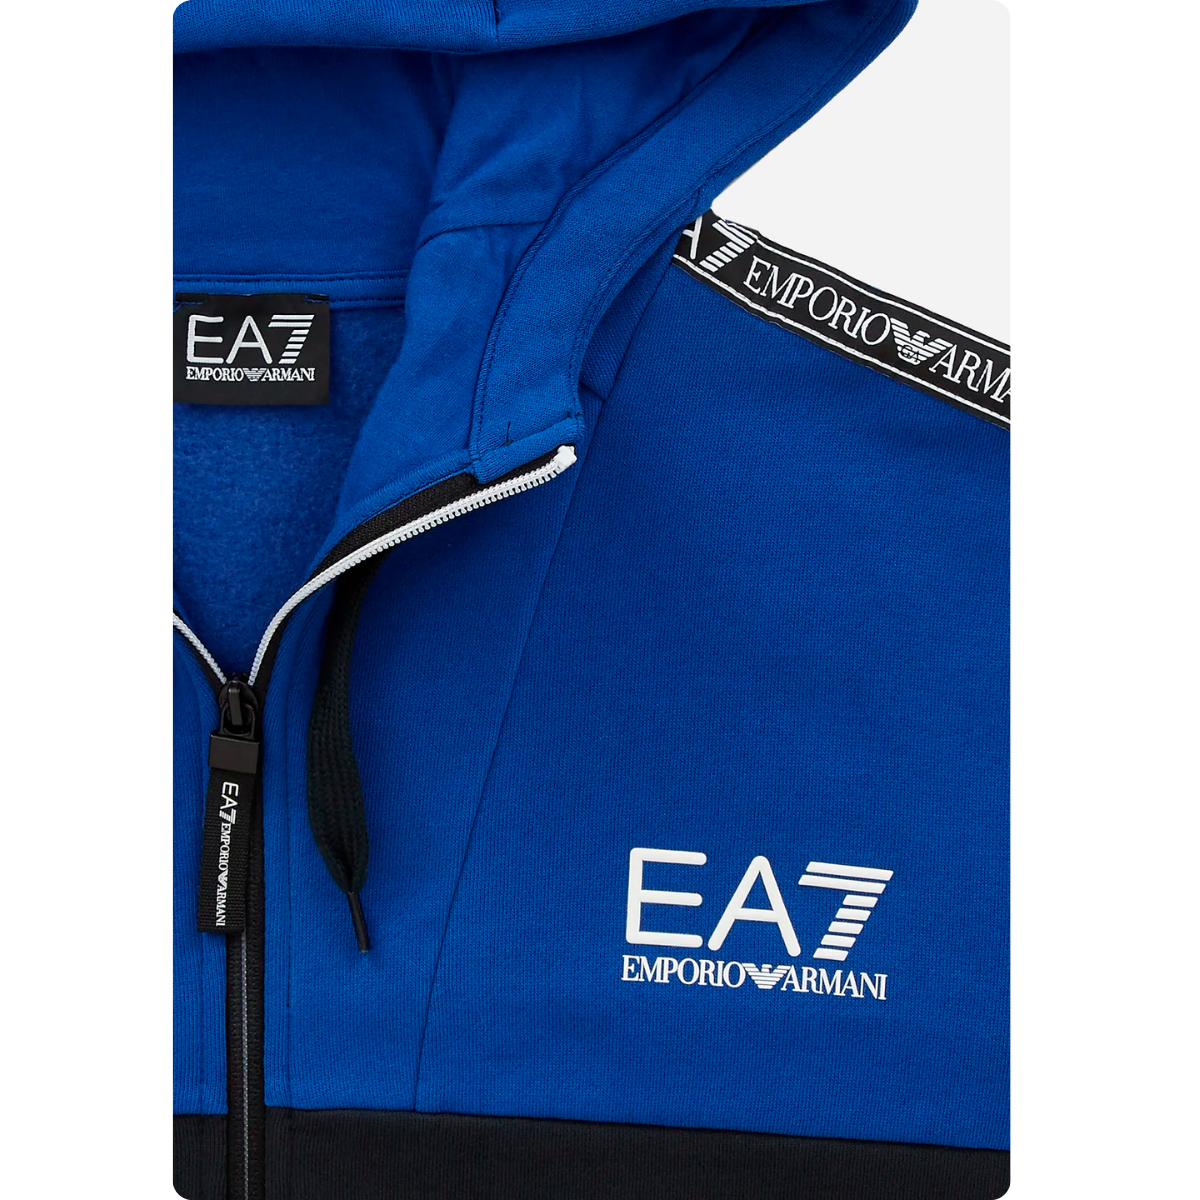 EA7 Emporio Armani - Tracksuit - Blue/Black